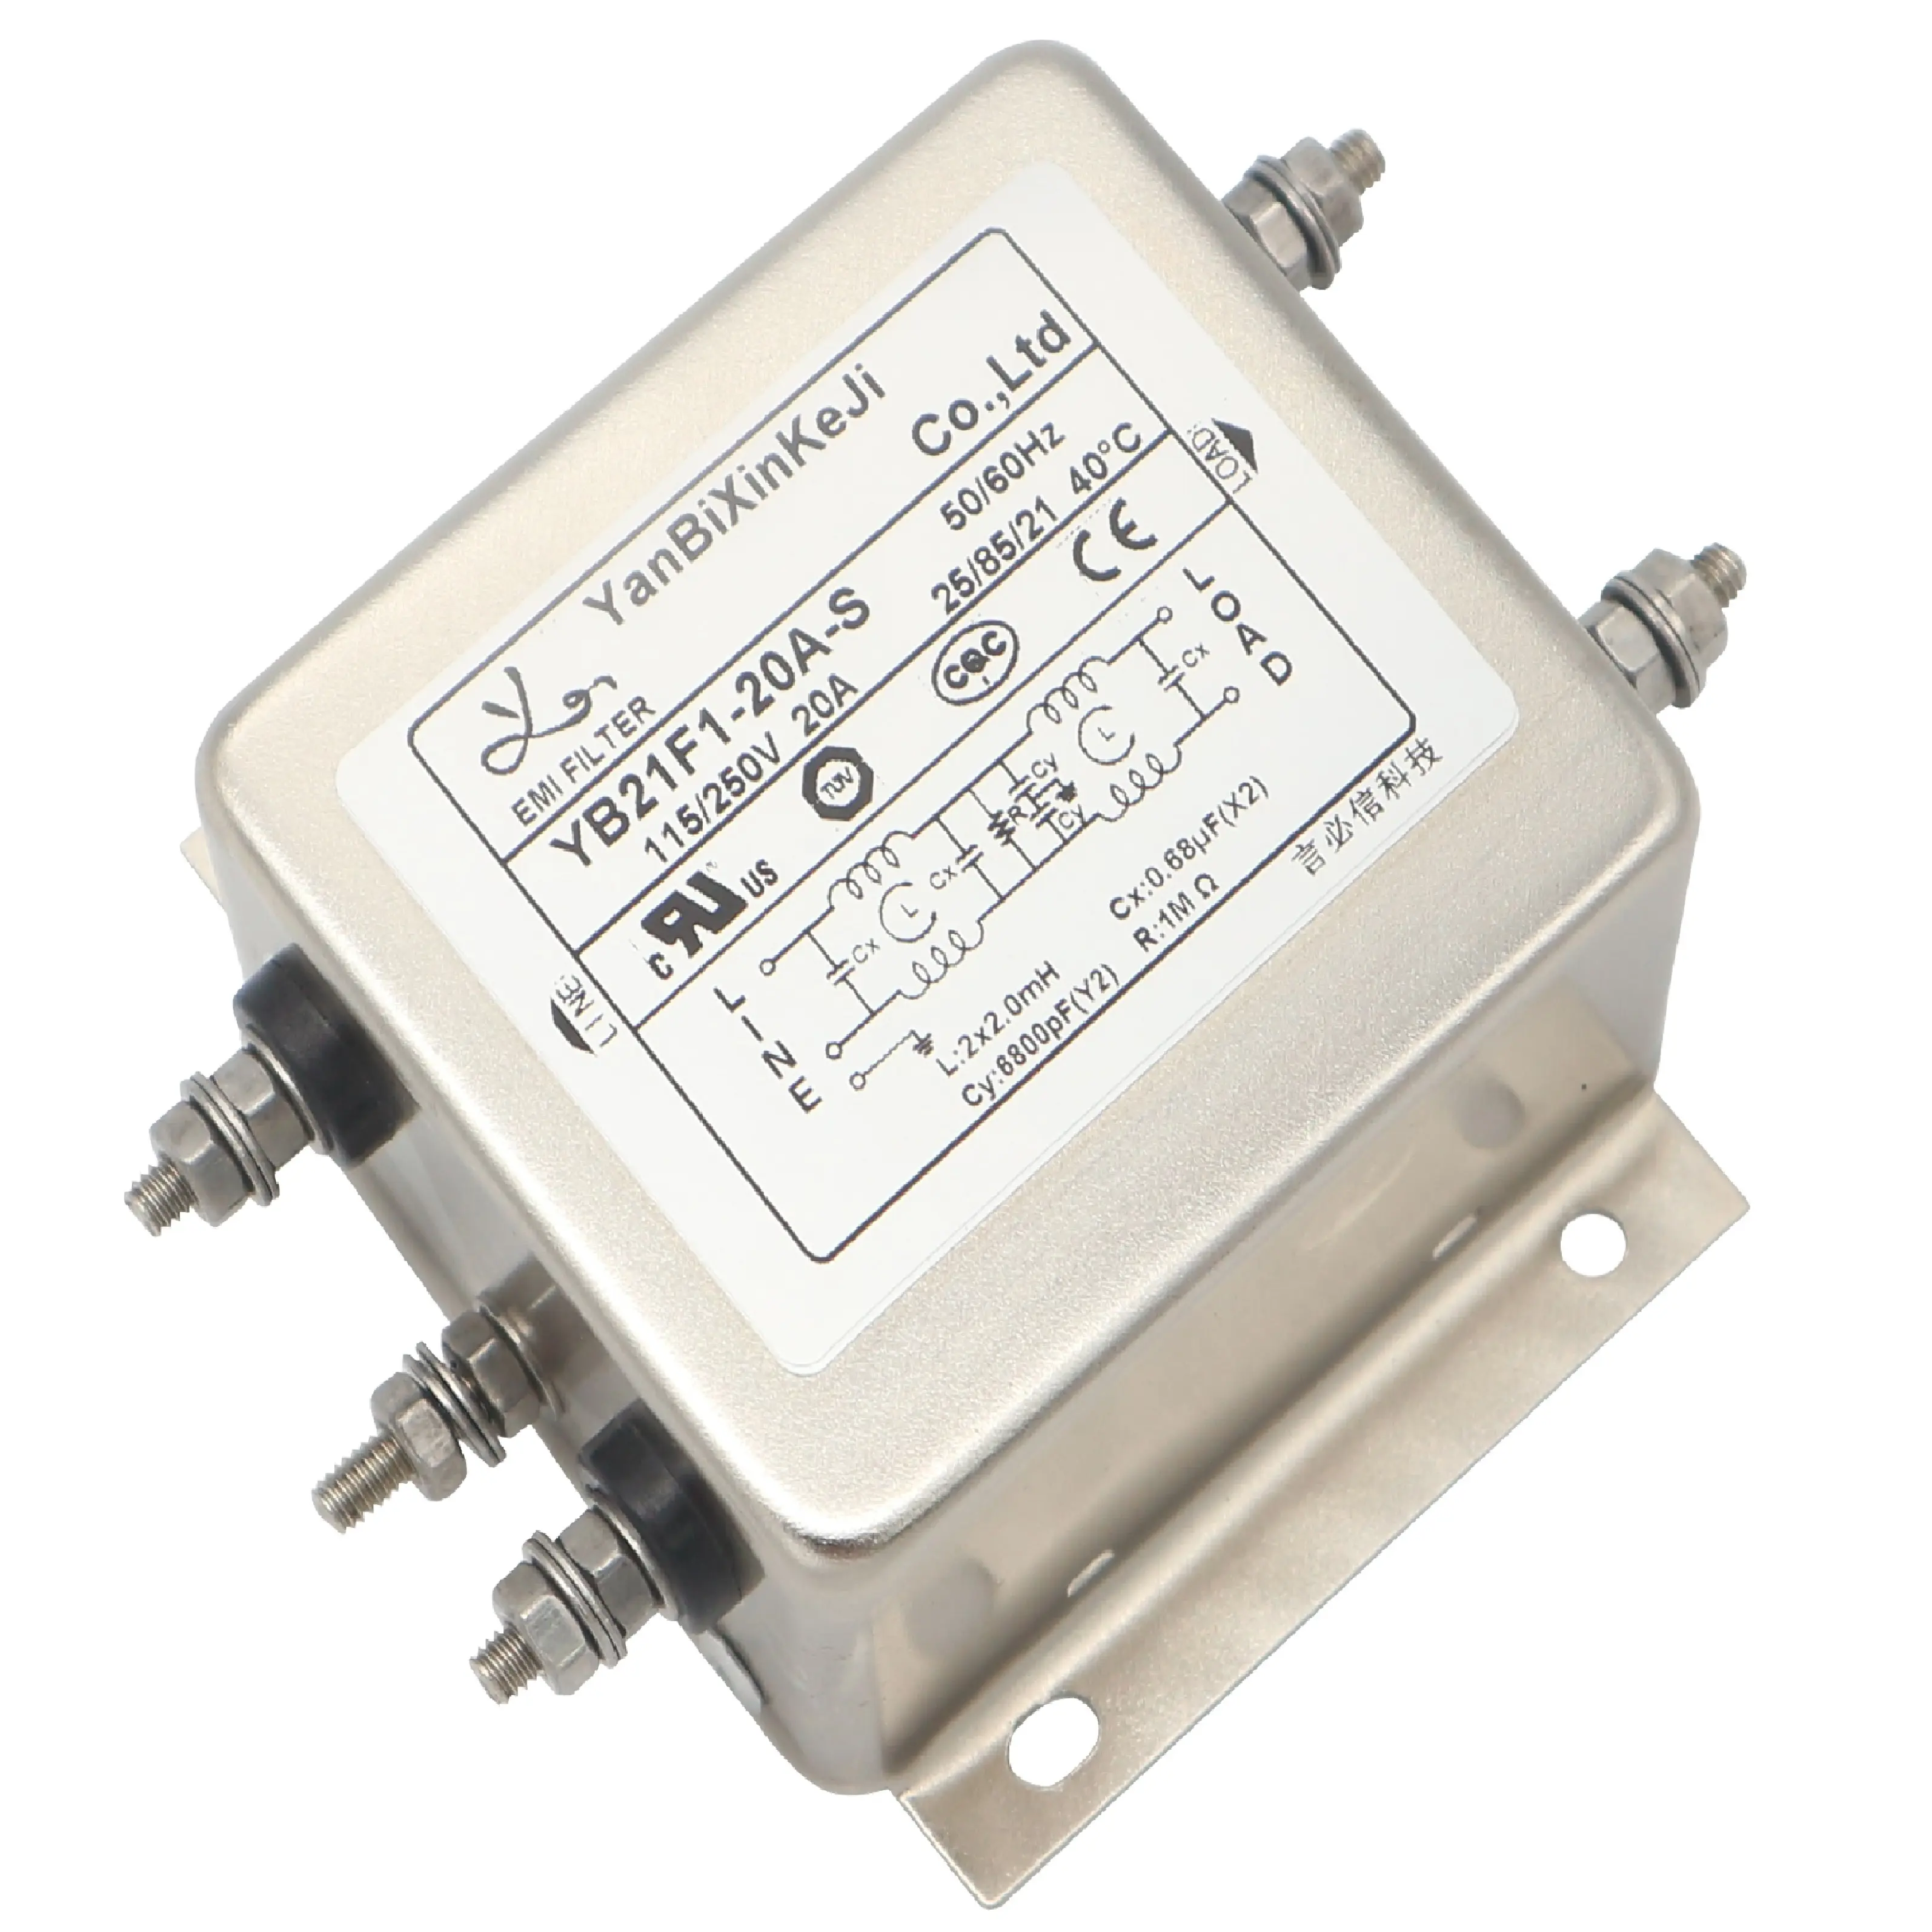 Yanbixin F1 20A 50 / 60HZ RFI EMI Electrical Power Filter for Equipment